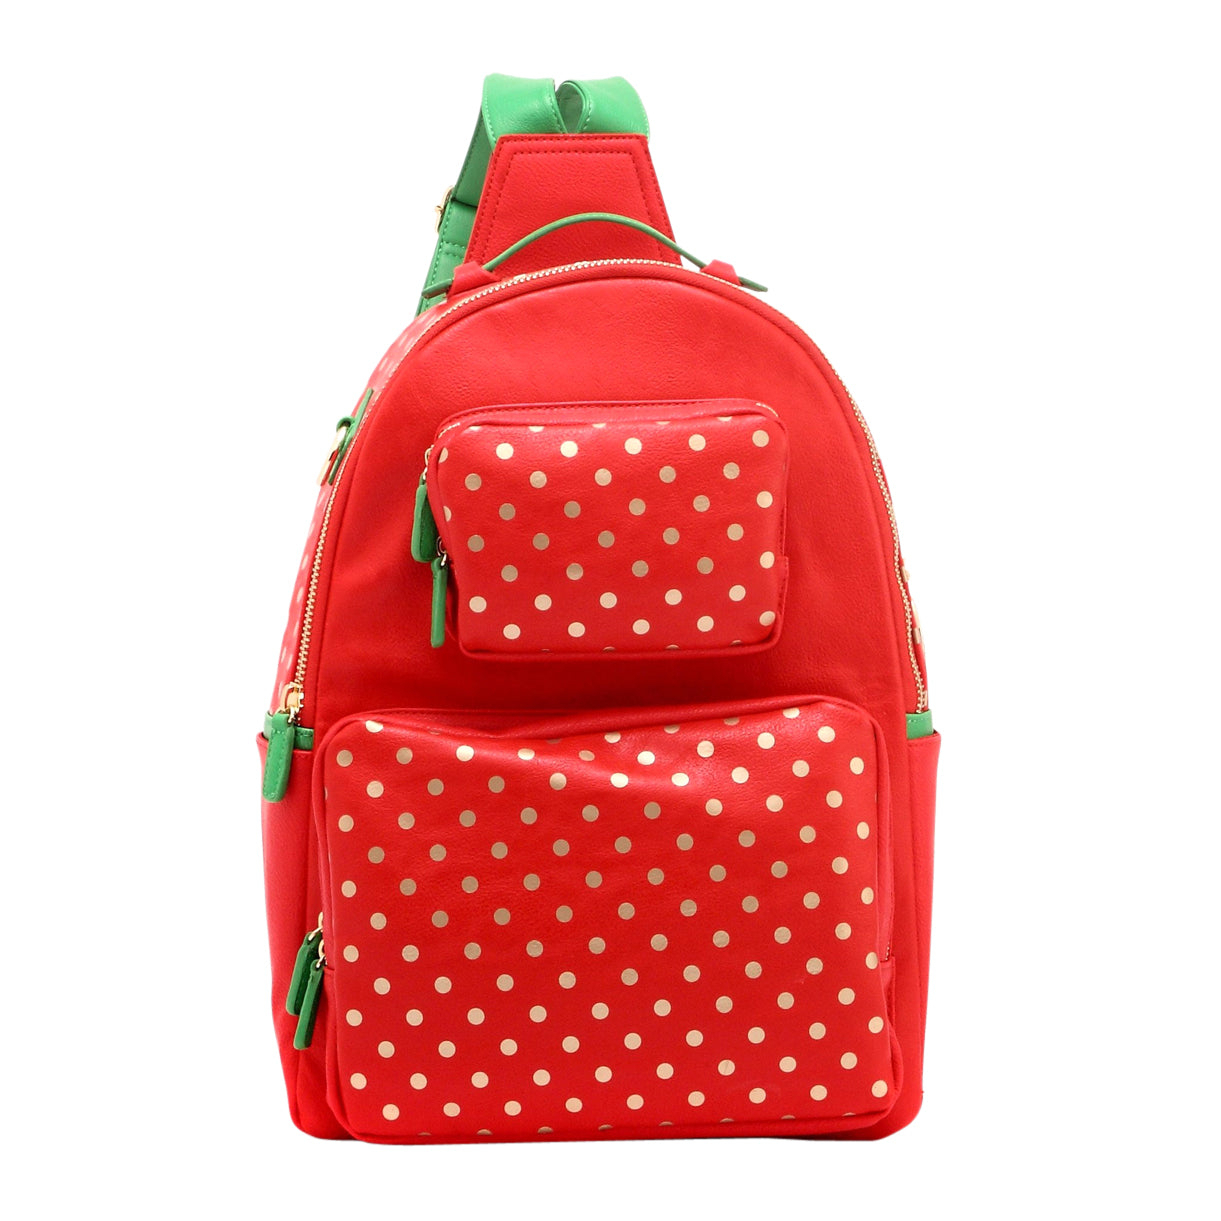 SCORE! Natalie Michelle Large Polka Dot Designer Backpack - Red, Gold And Green